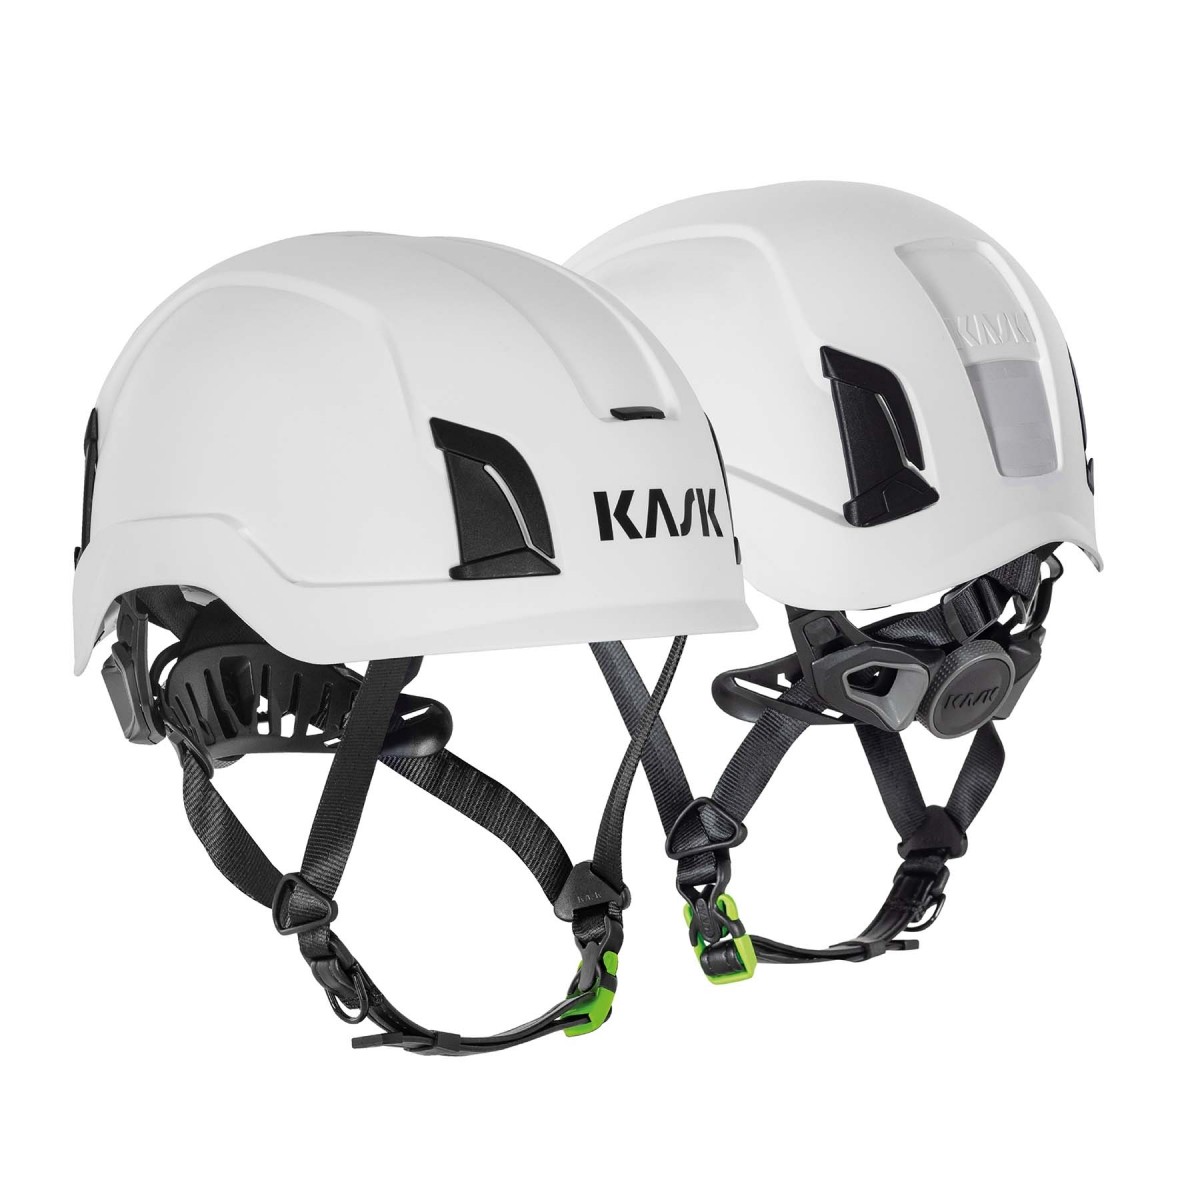 helmets › ZENITH X2 › ZENITH X2 ANSI Z89.1 Type I , Type II - Class E ‹  Kask Safety